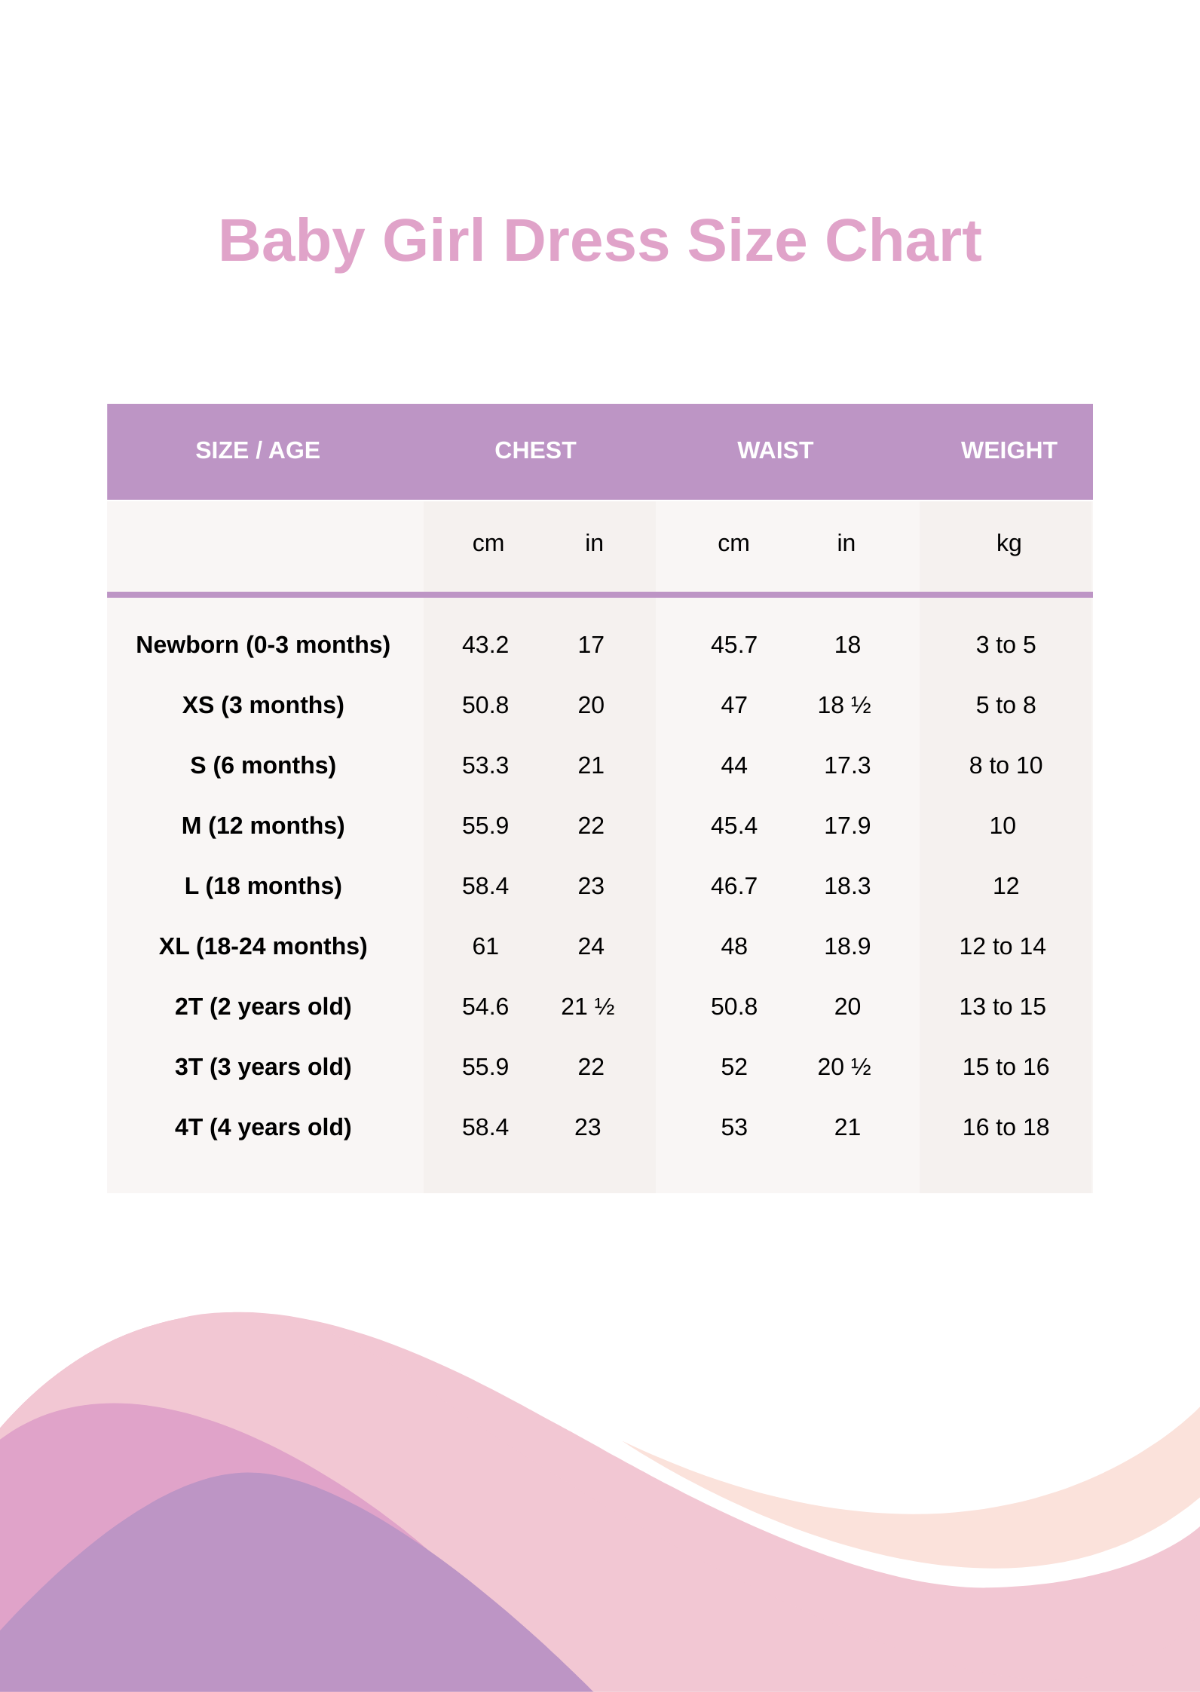 Baby Girl Dress Size Chart Template